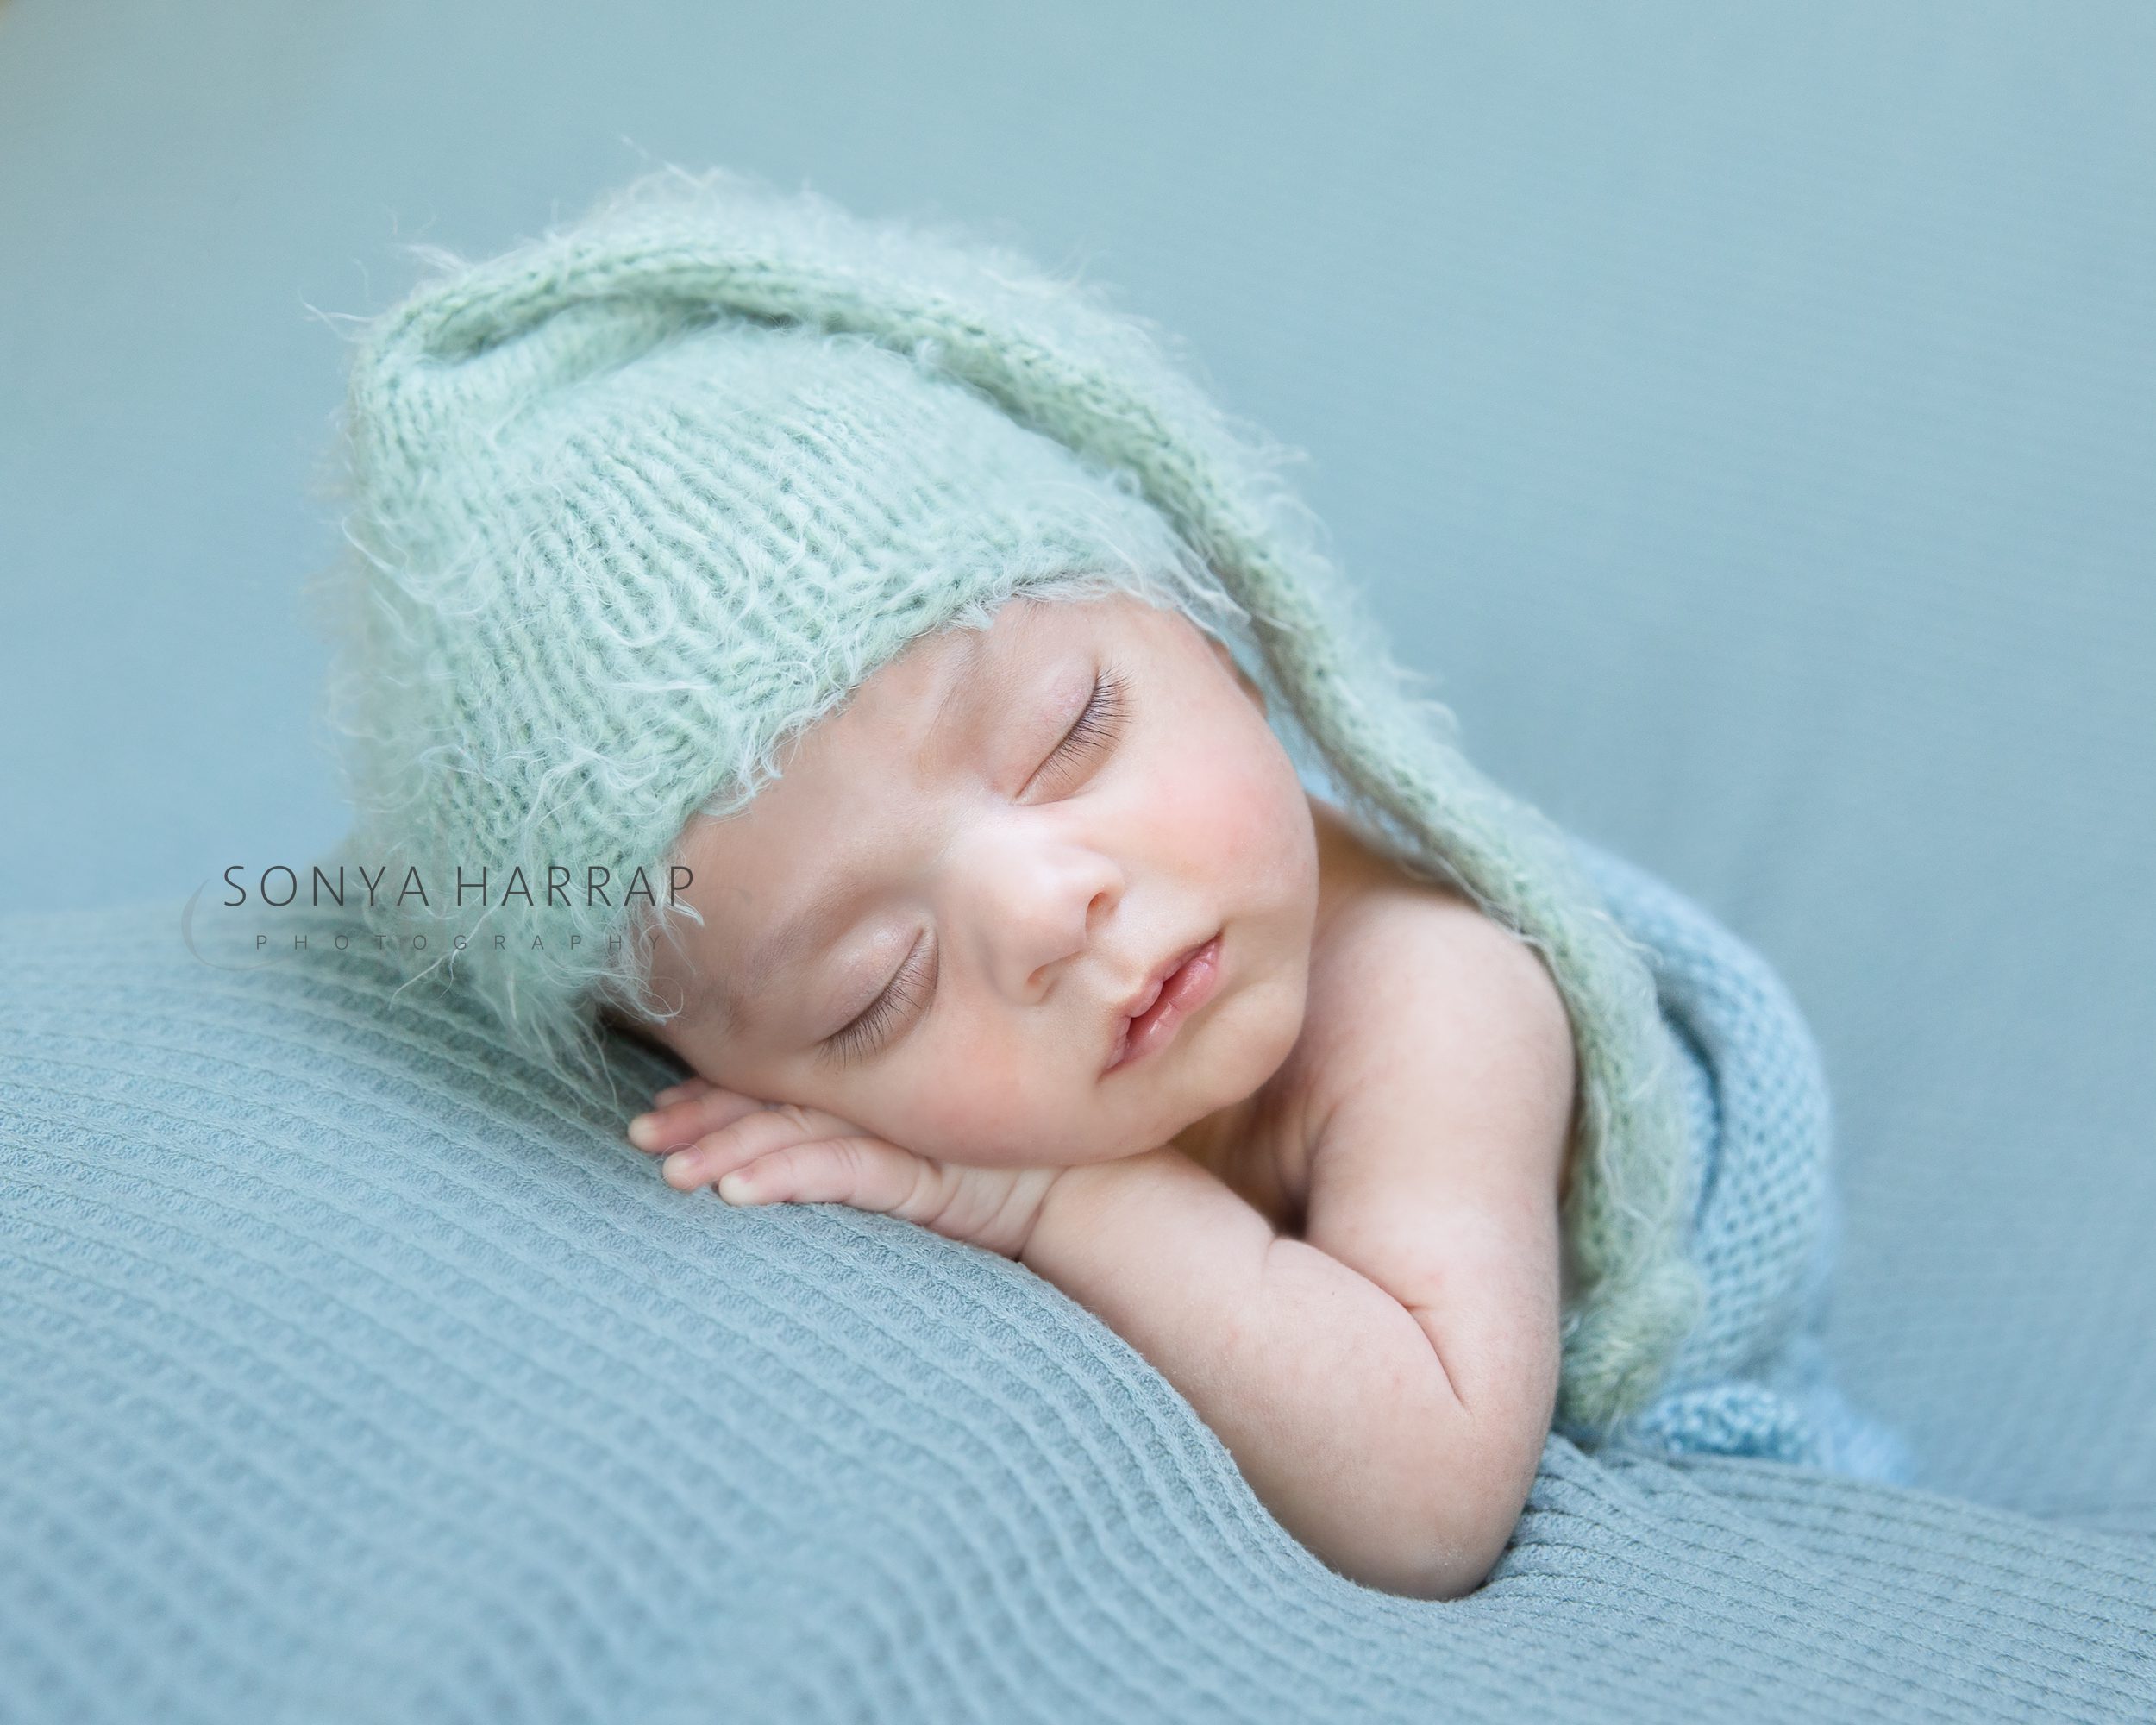 Baby boy newborn photoshoot in mint green by Sonya Harrap